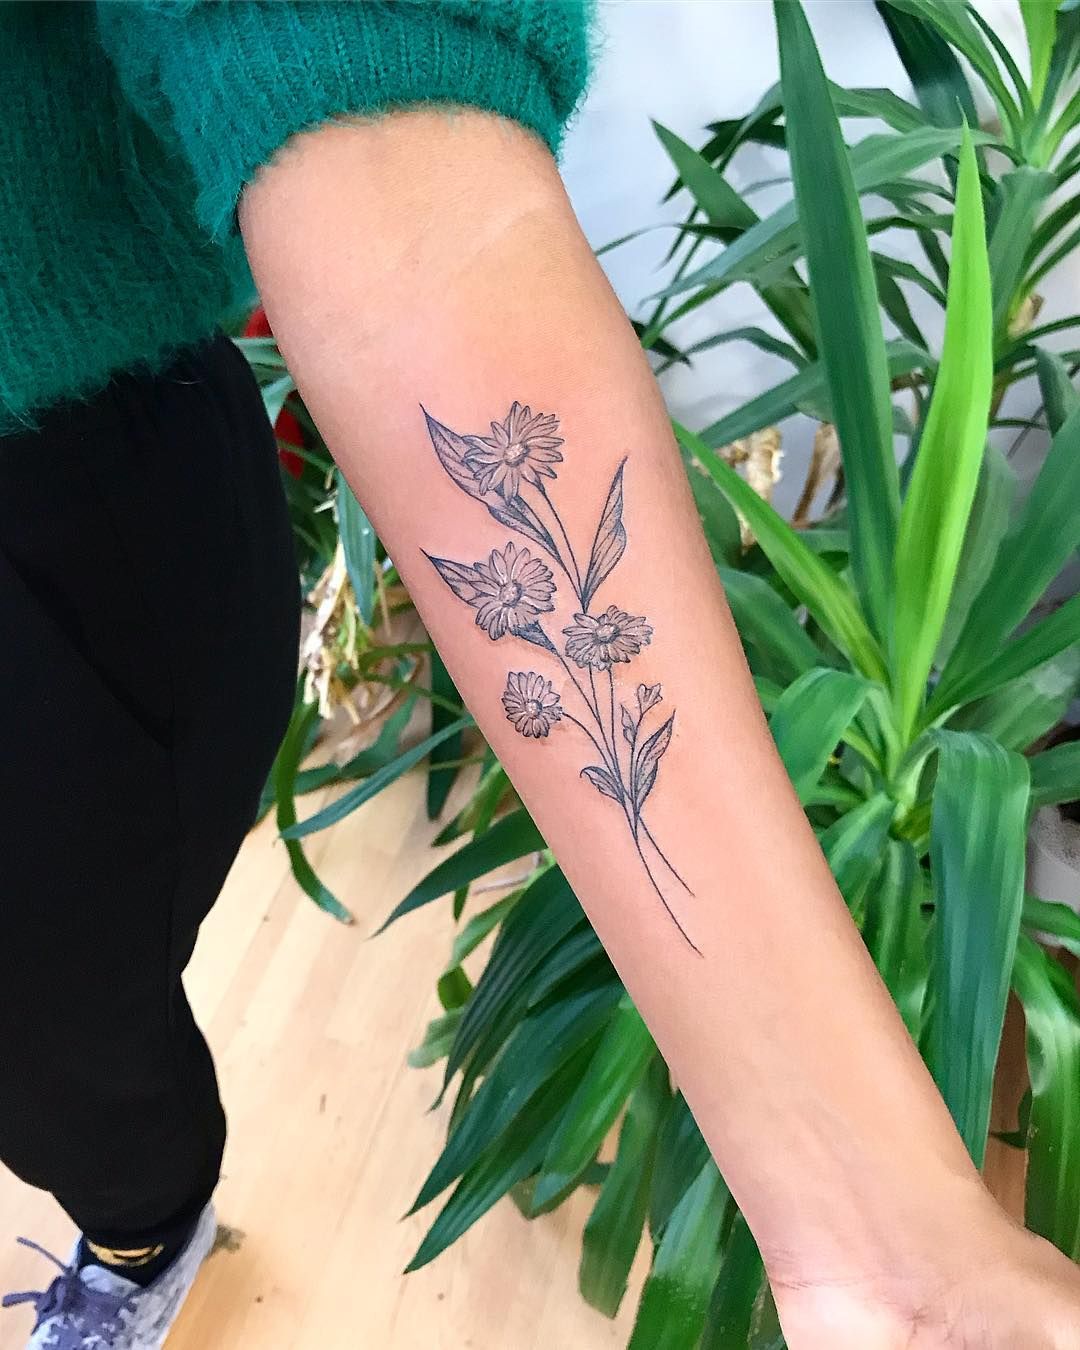 Aster Flower Tattoo Design on Hand.